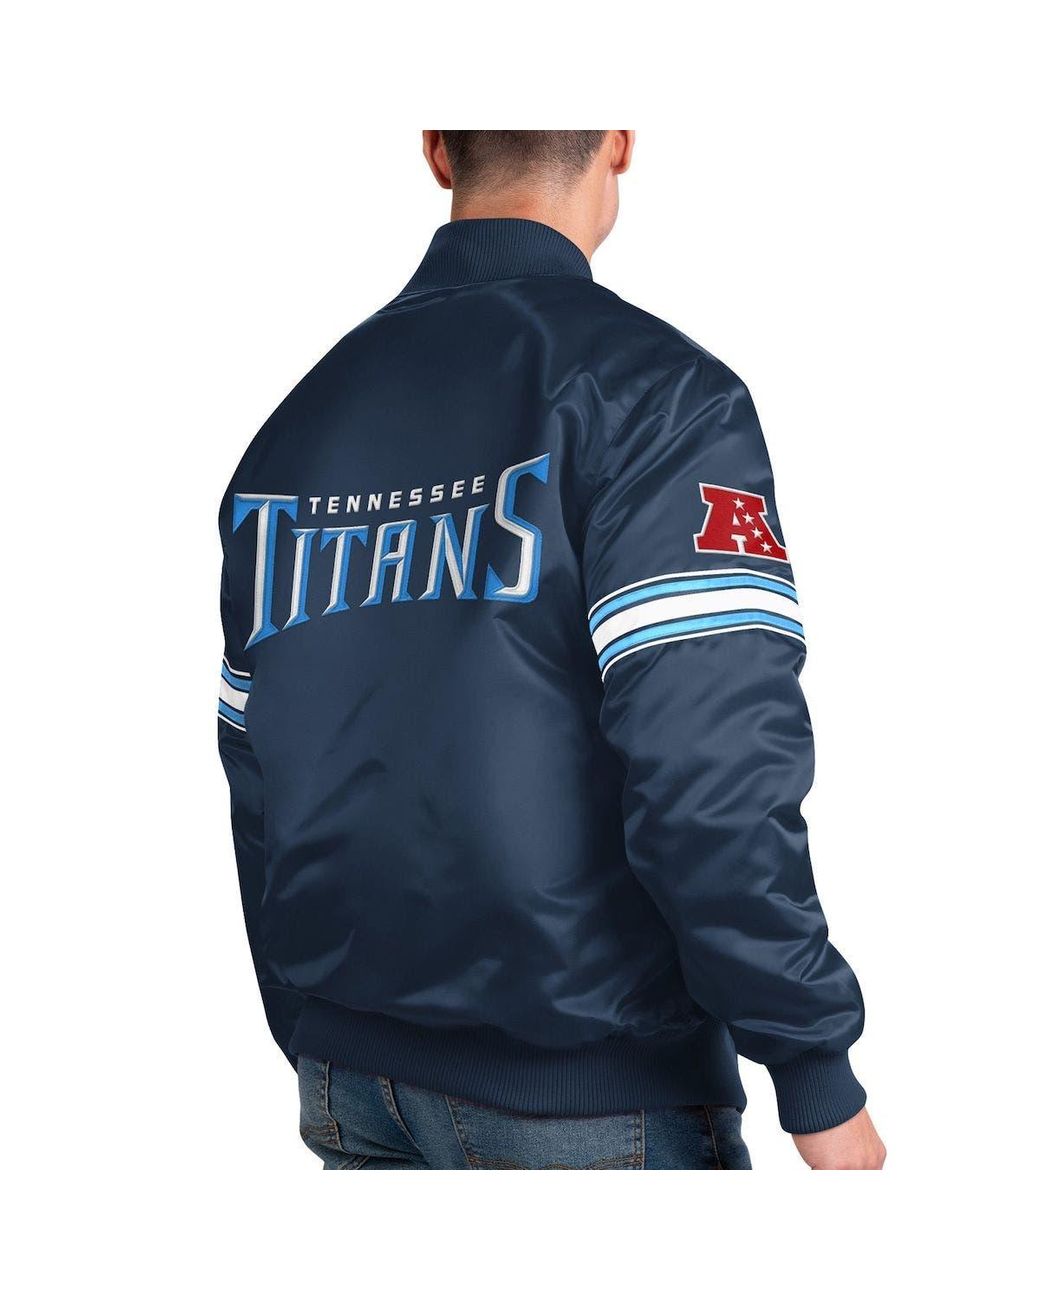 Starter Men's Tennessee Titans Shutout Snap Blue Jacket